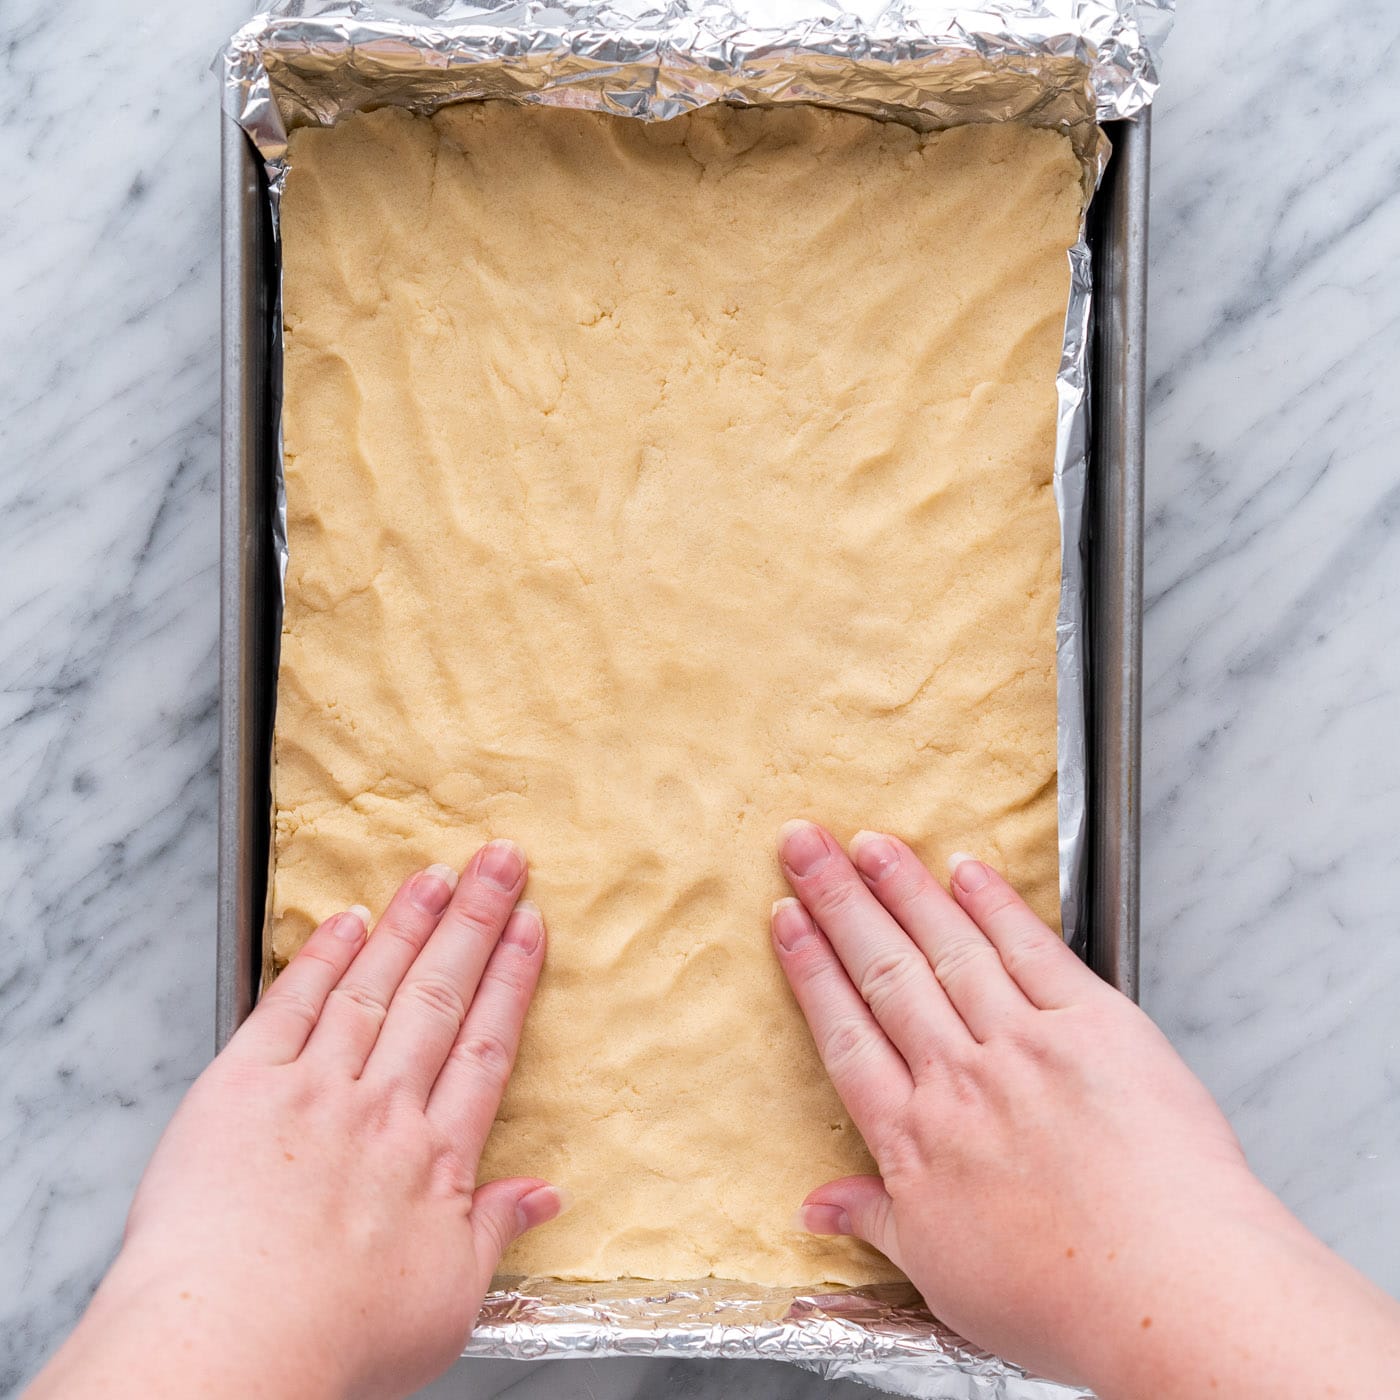 hands flattening shortbread crust in a baking pan